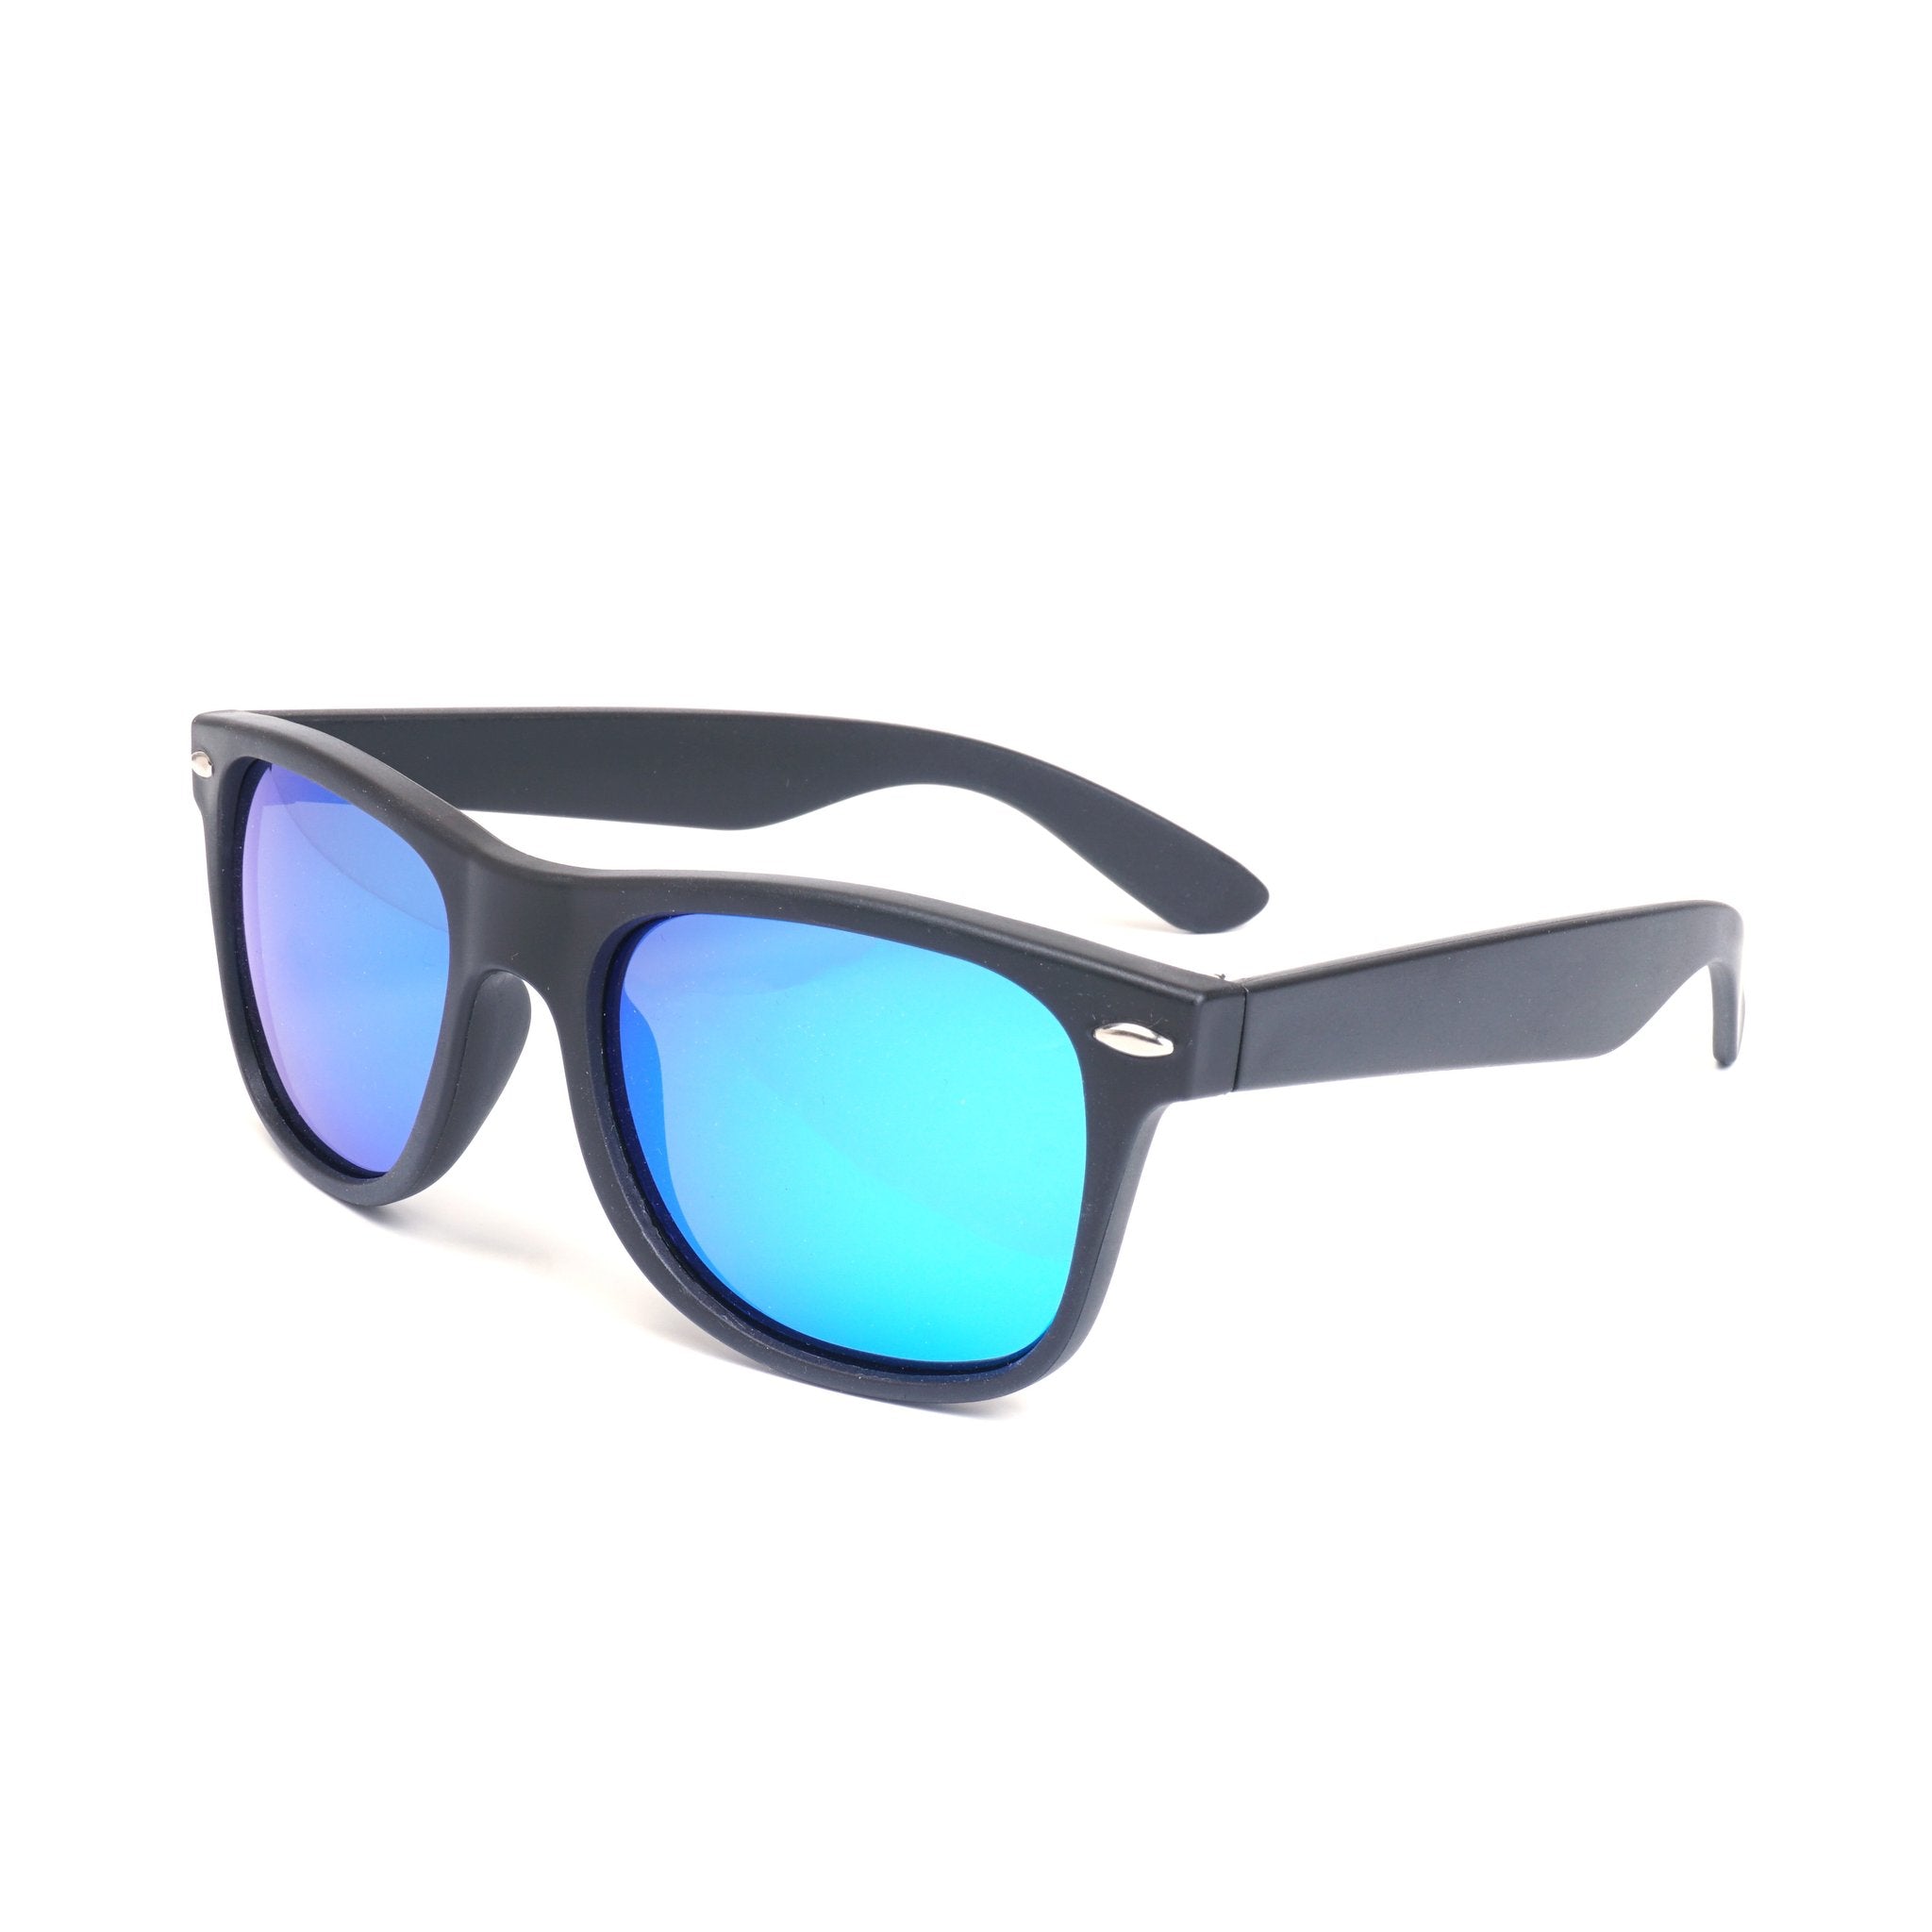 Stage Rebel Floating Sunglasses - Polarized Blue